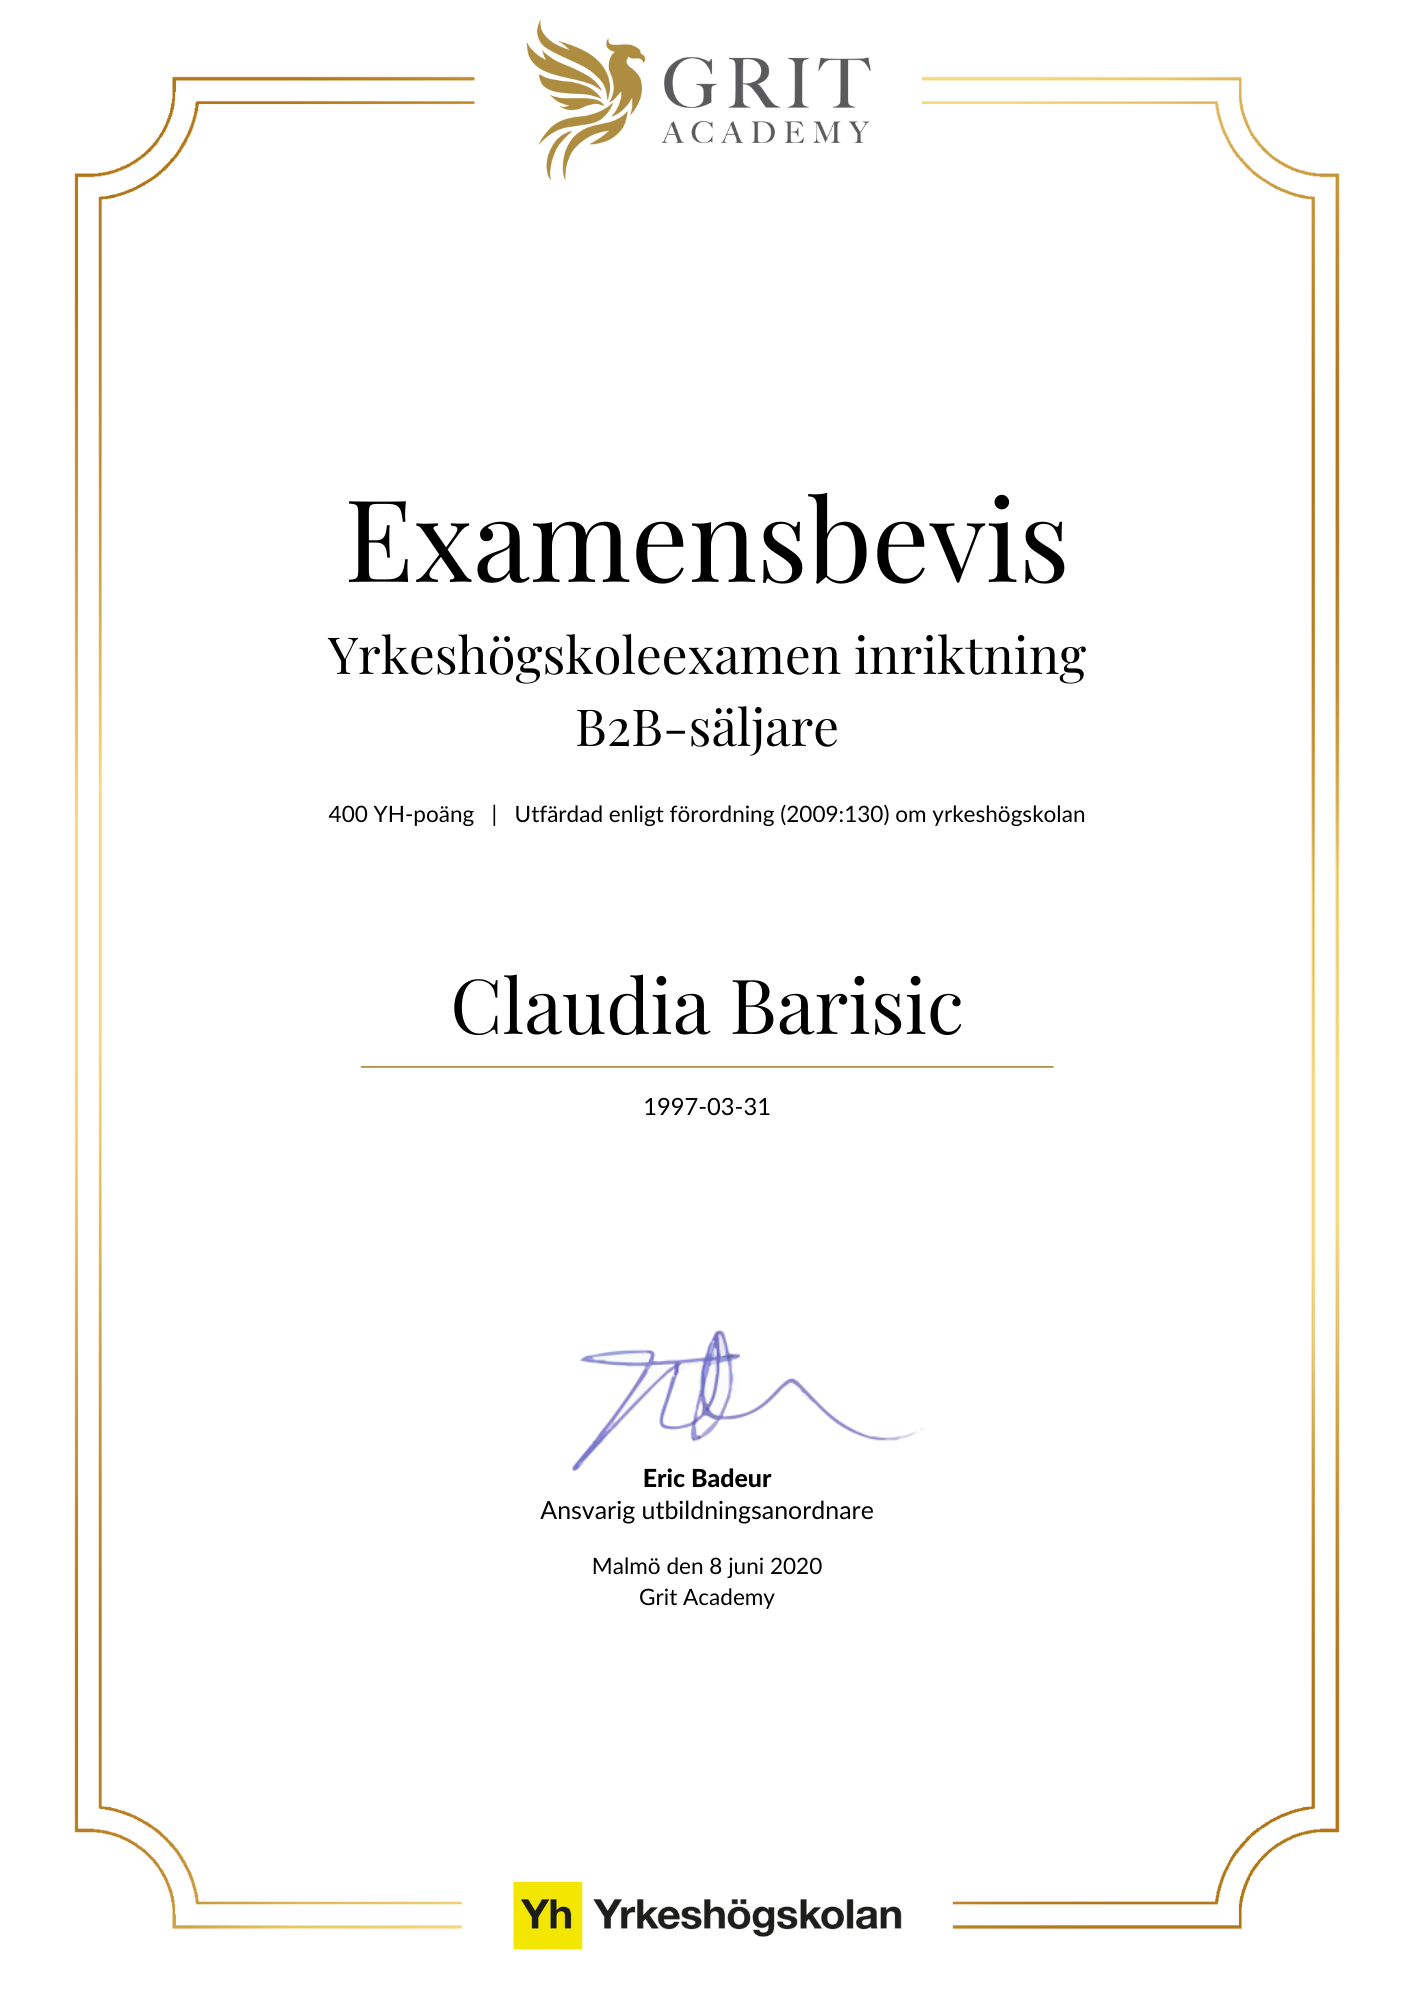 Examensbevis Claudia Barisic - 1